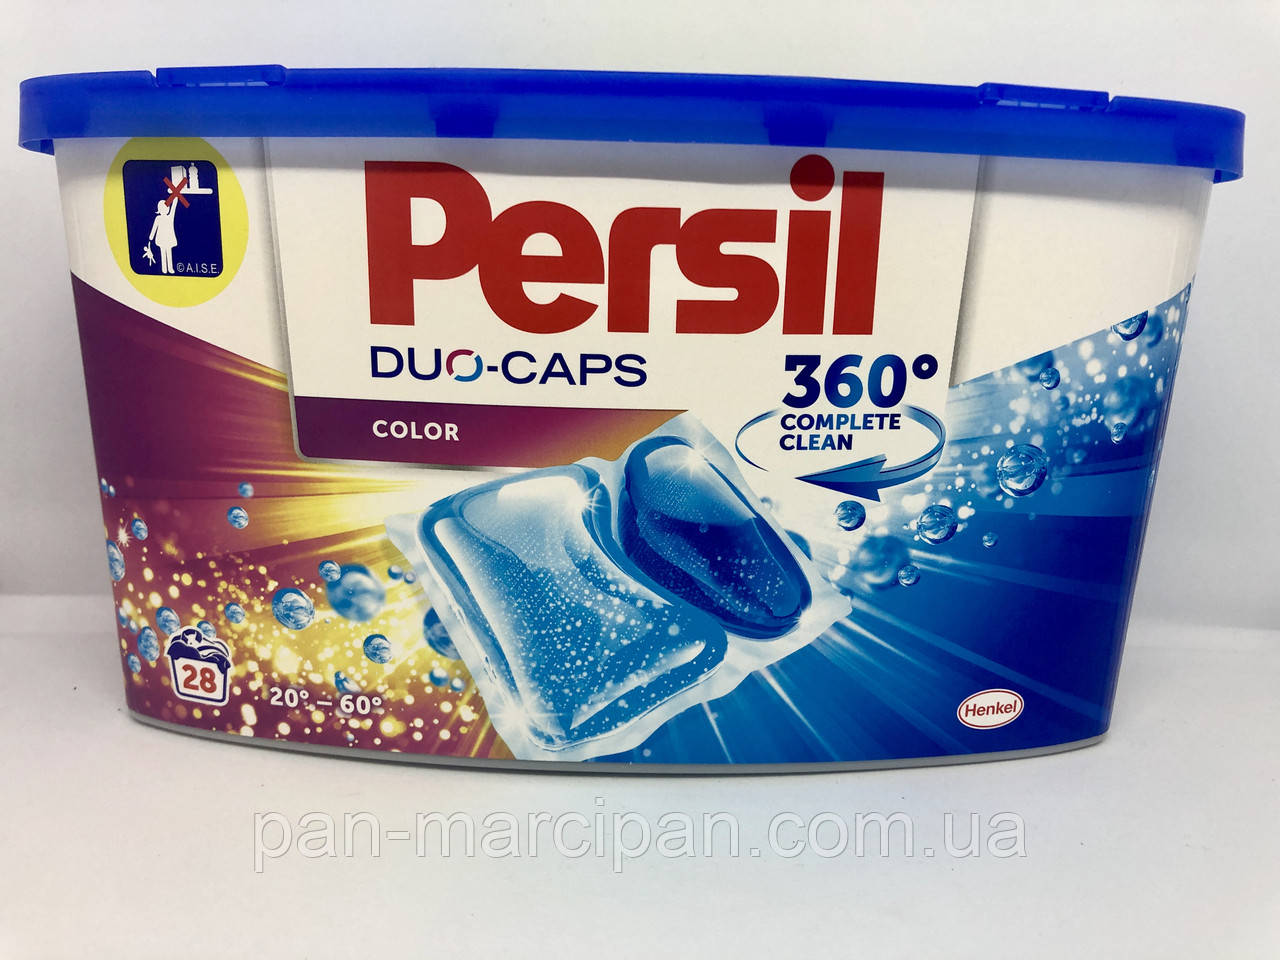 Капсули для прання Persil Duo-caps 360 Complite Clean (28шт)